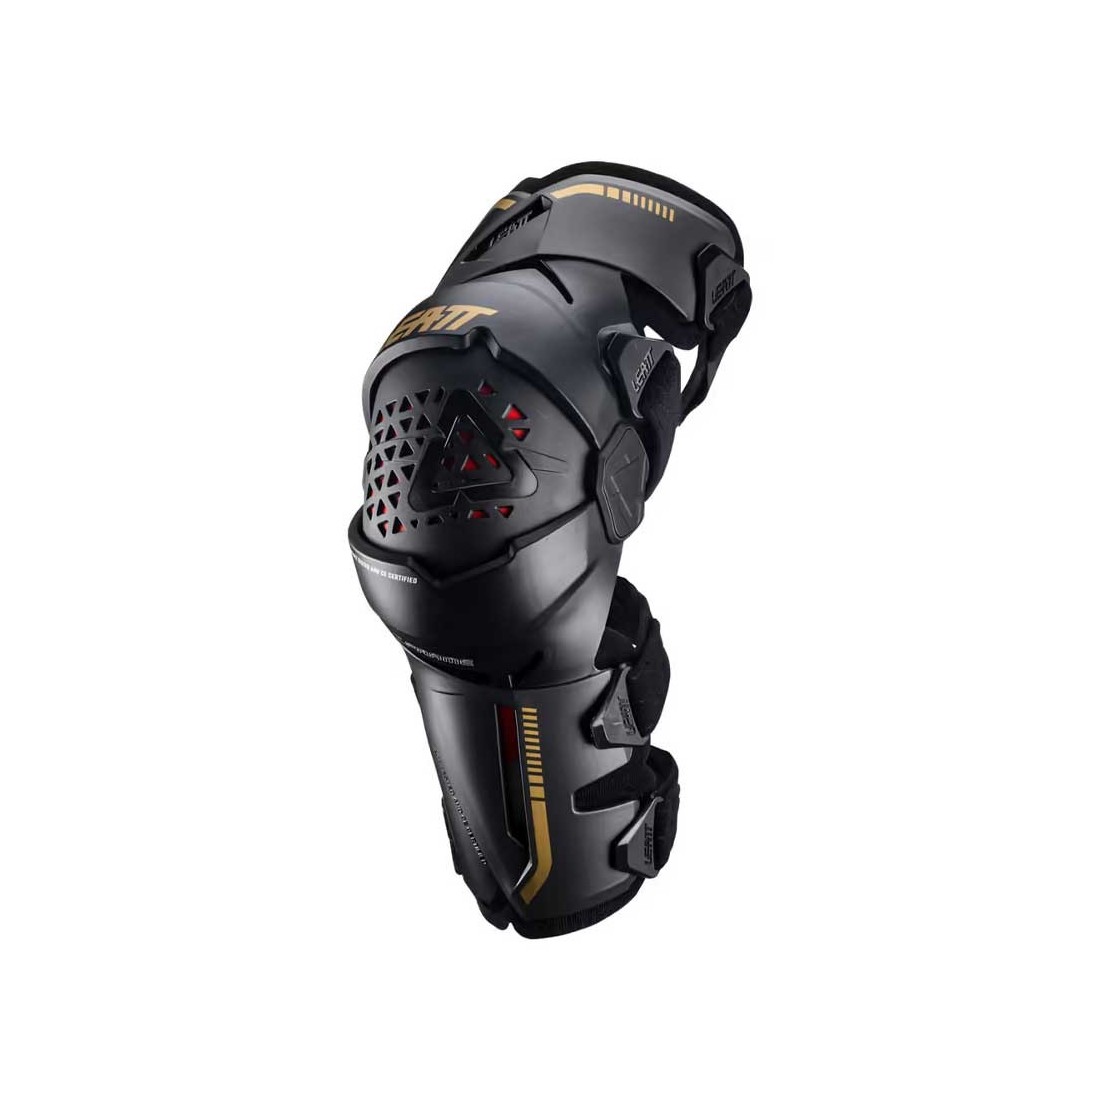 Ginocchiere Ortopediche Motocross Leatt C-Frame Pro Carbon